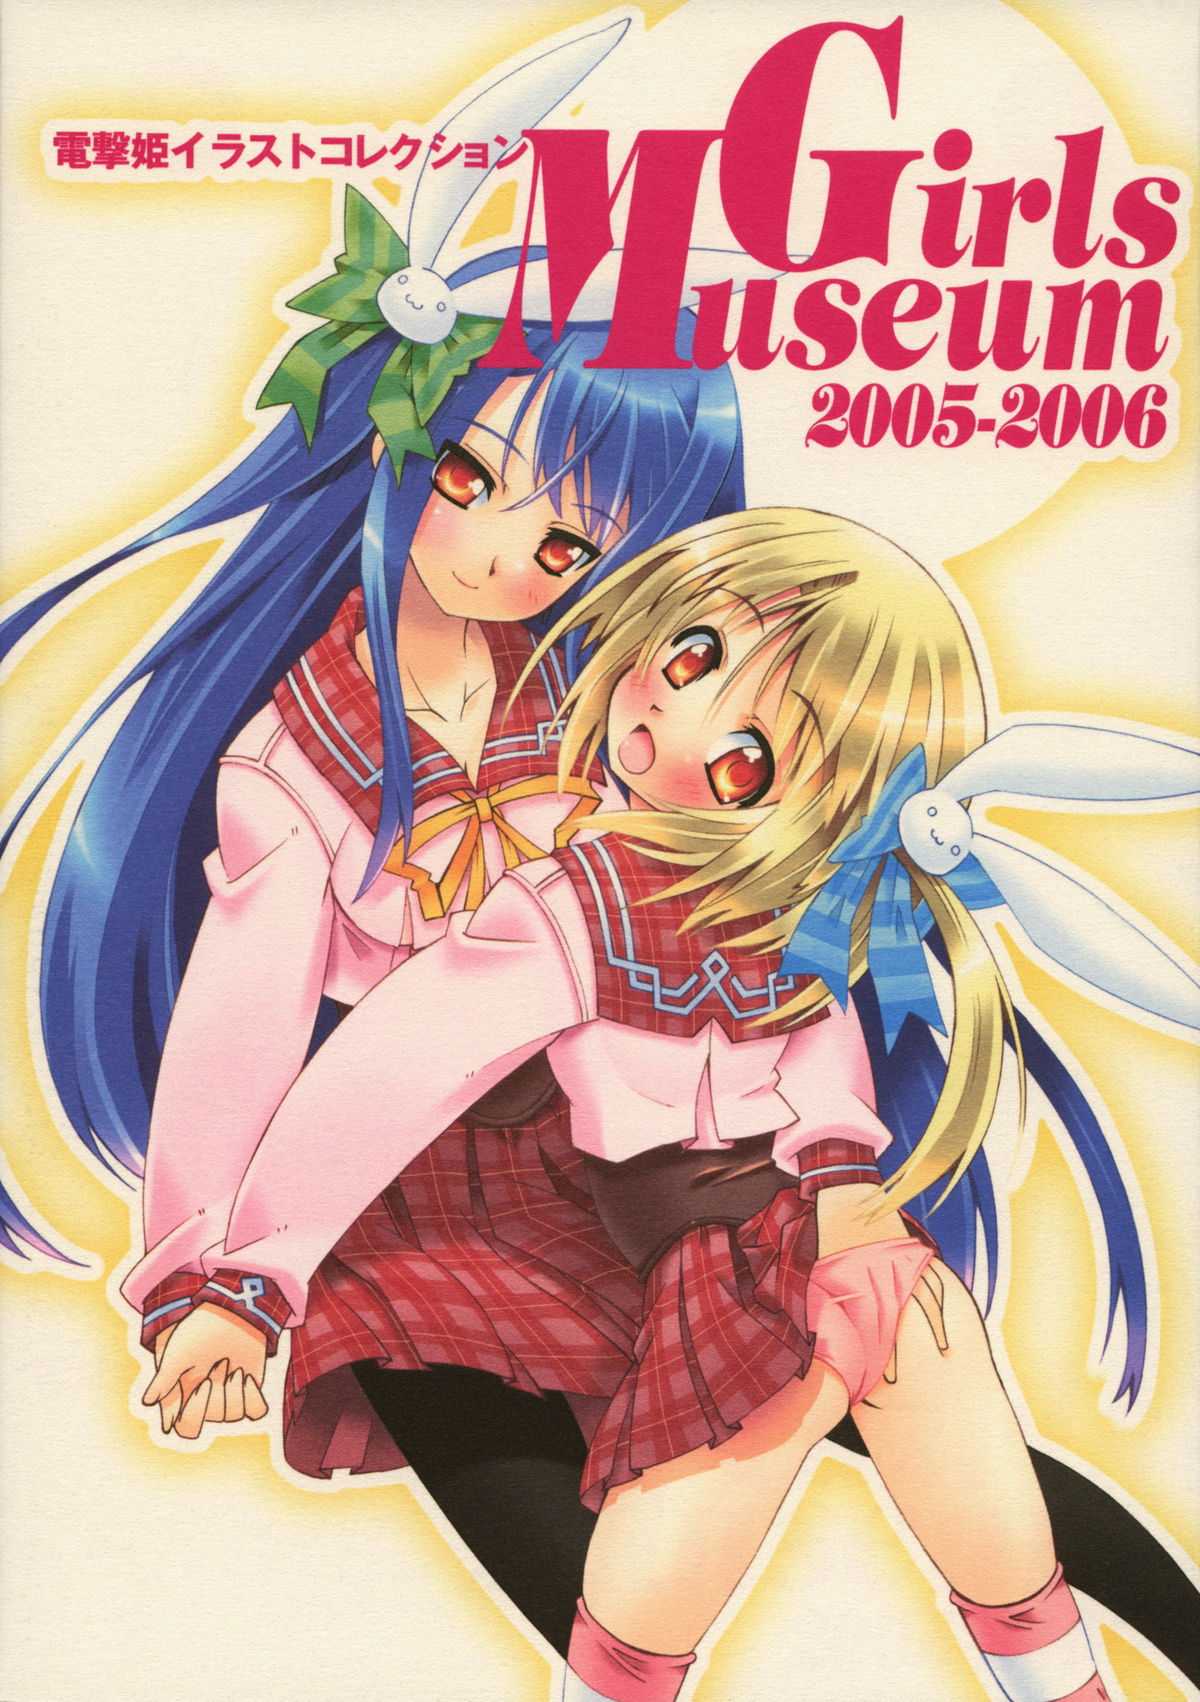 Dengeki-Hime Collection - Girls Museum 2005-2006 電撃姫イラストコレクション Girls Museum 2005-2006